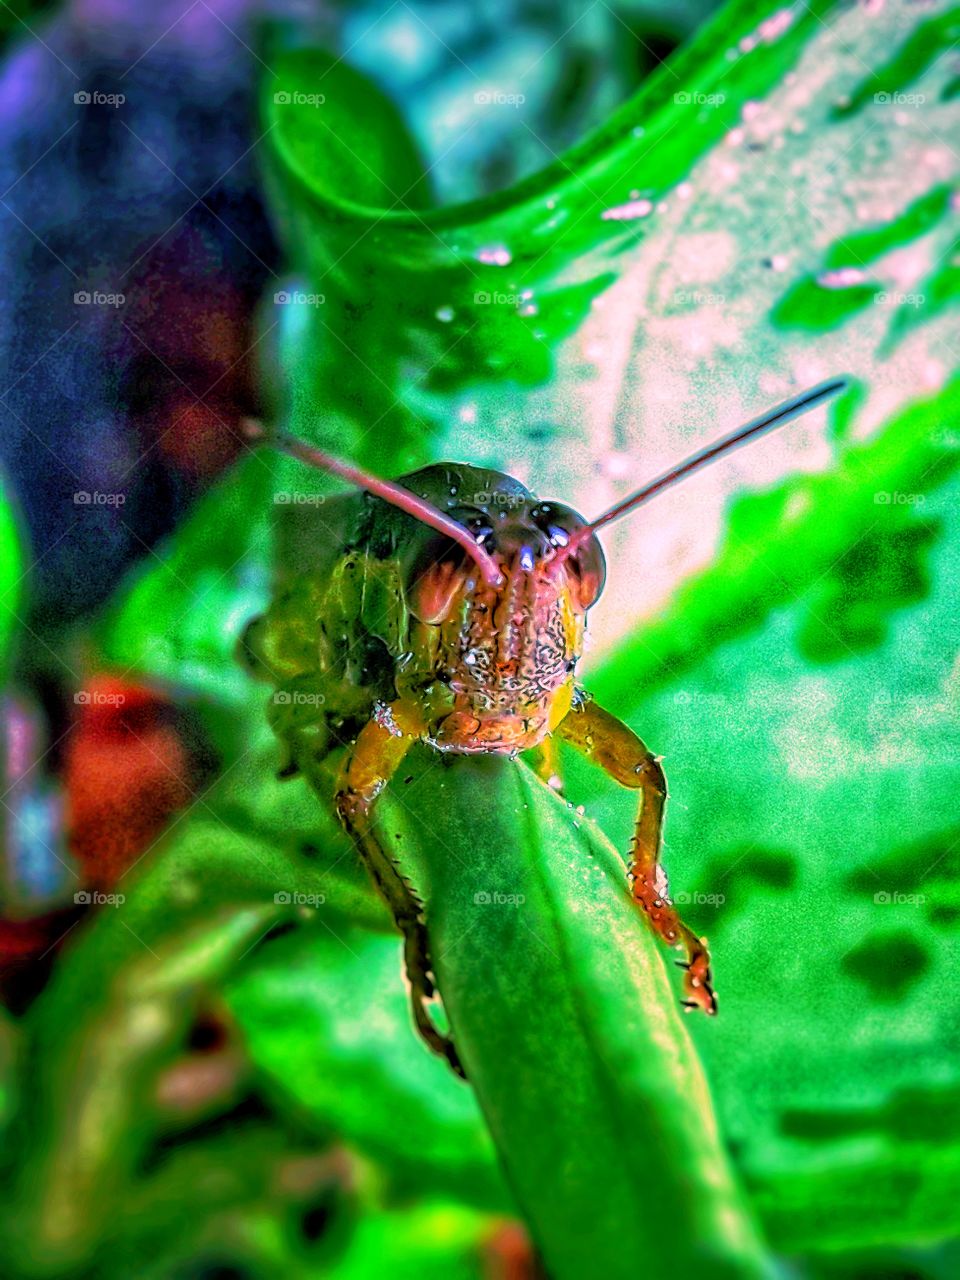 Grasshopper claimbing on leaf